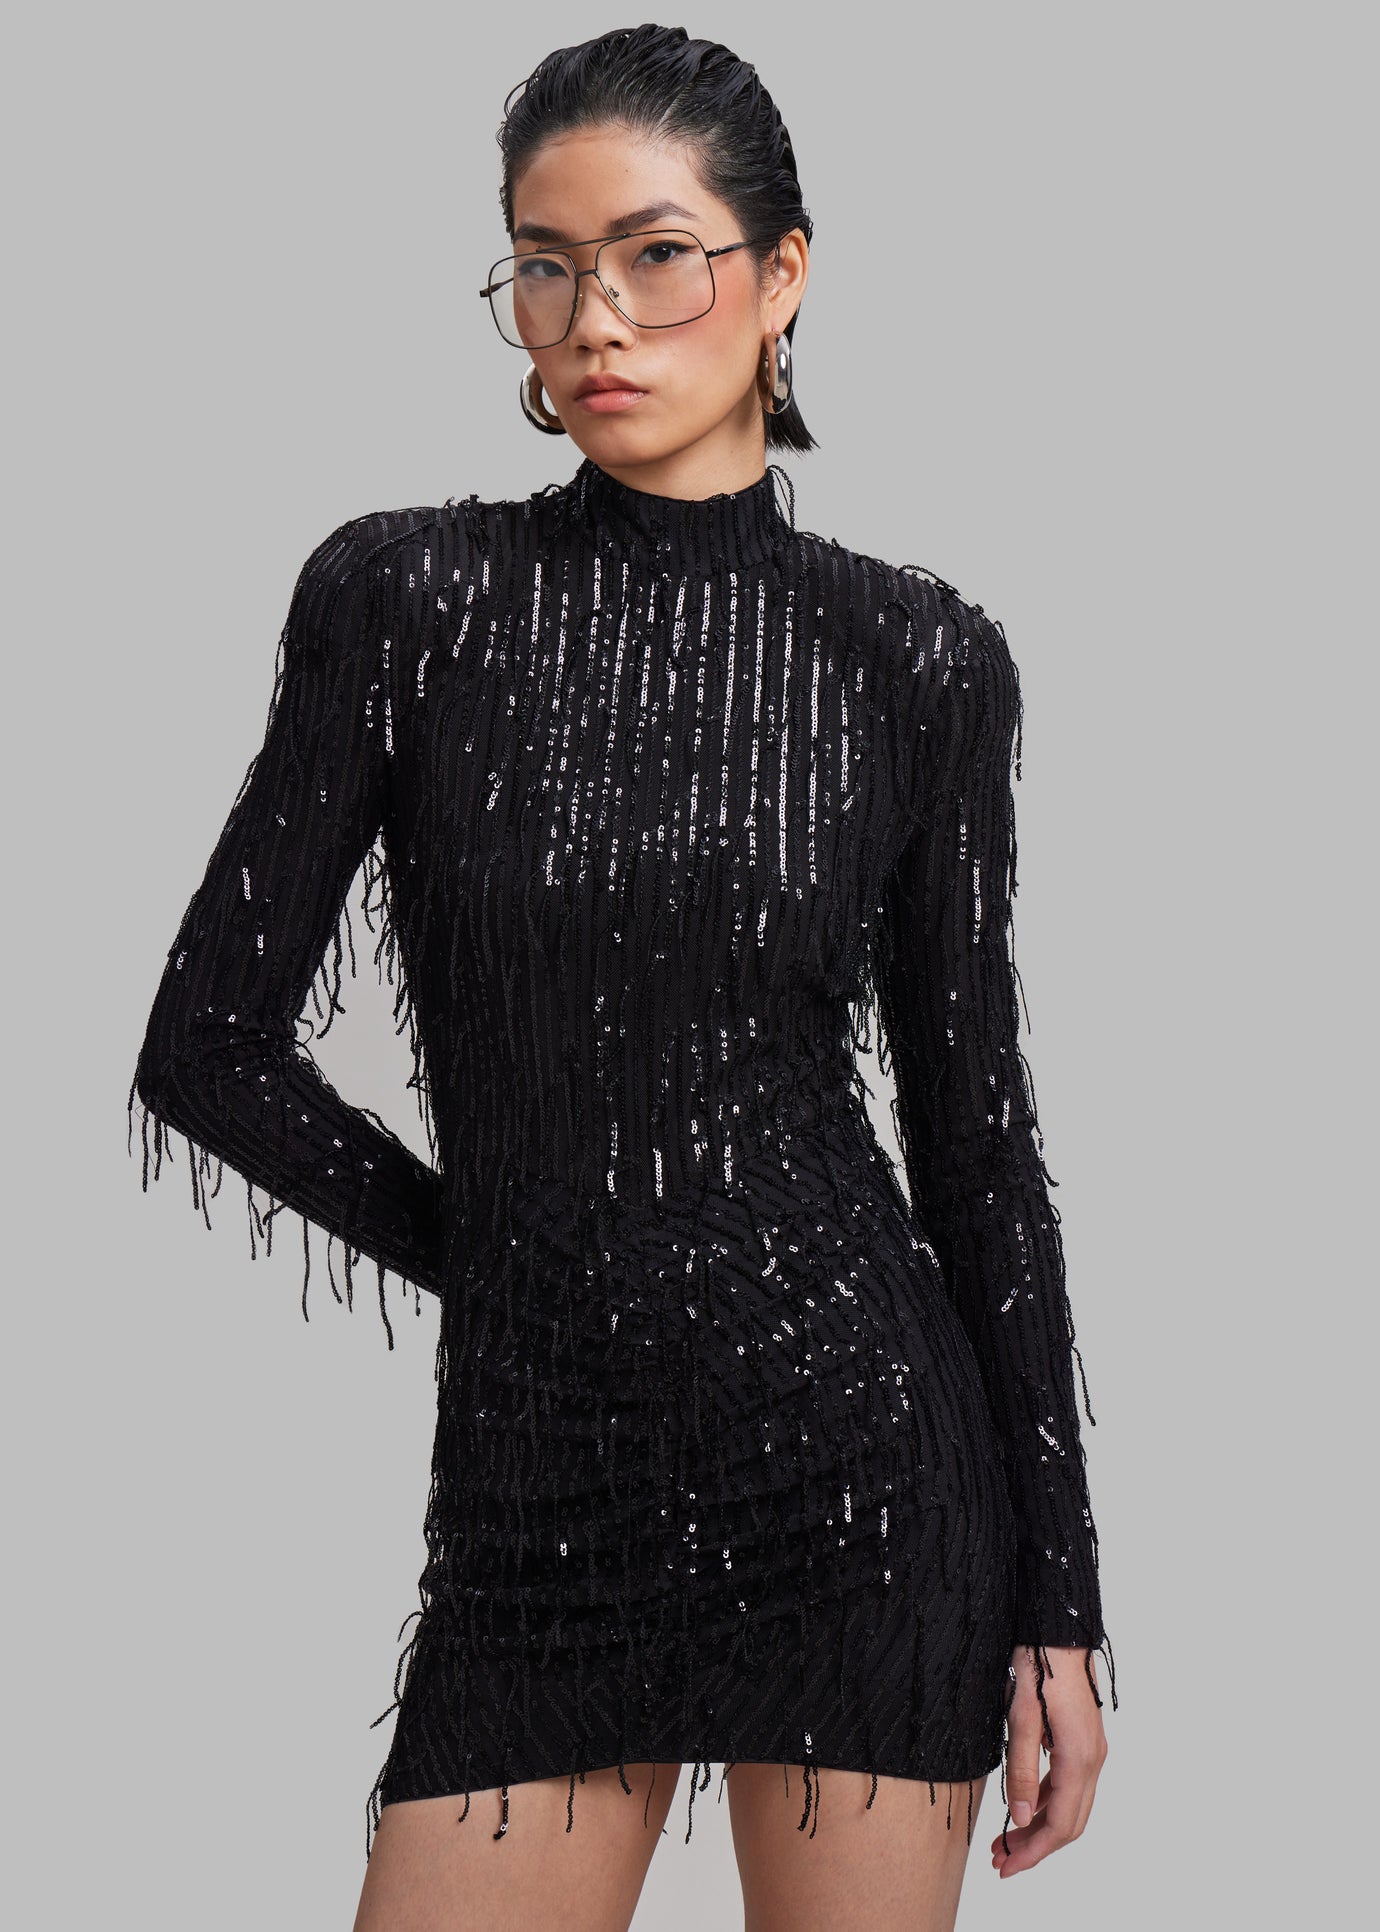 ROTATE Sequin Fringe Mini Dress - Black - 1